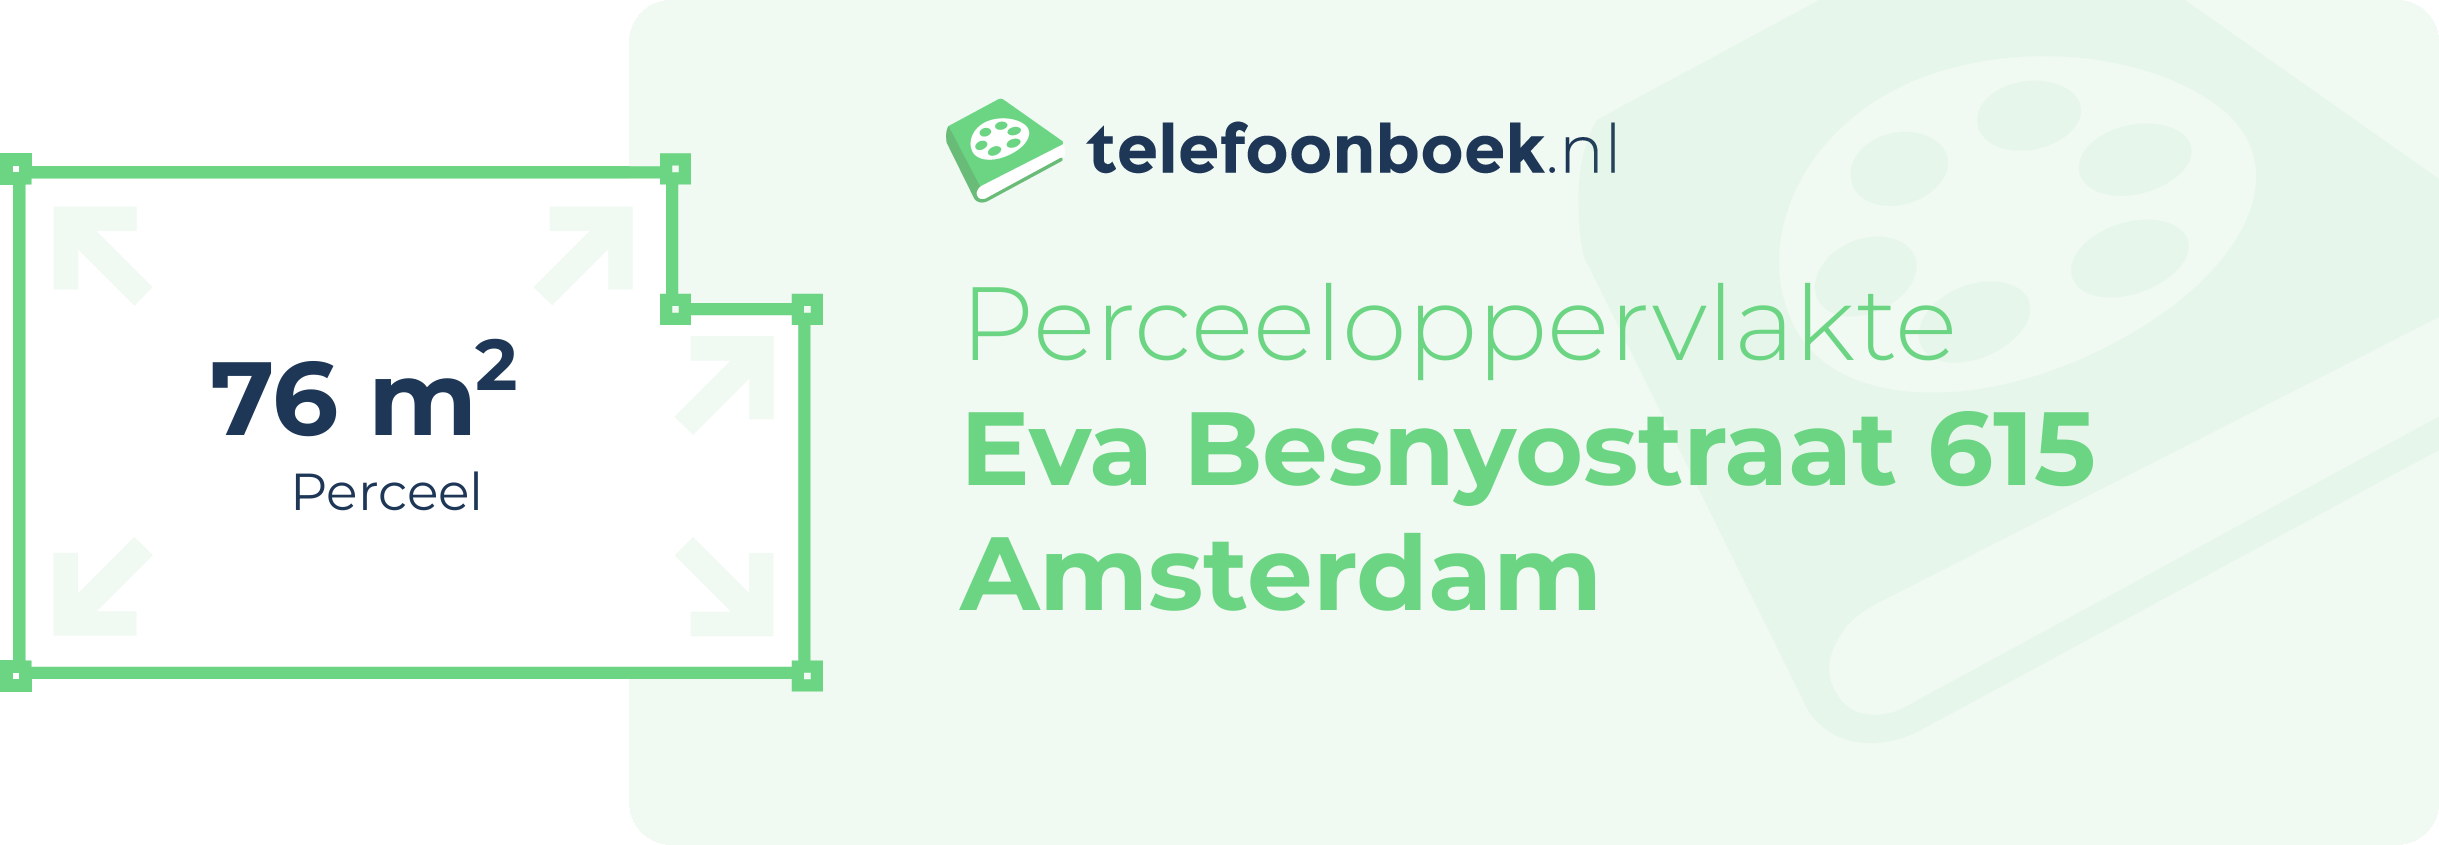 Perceeloppervlakte Eva Besnyostraat 615 Amsterdam